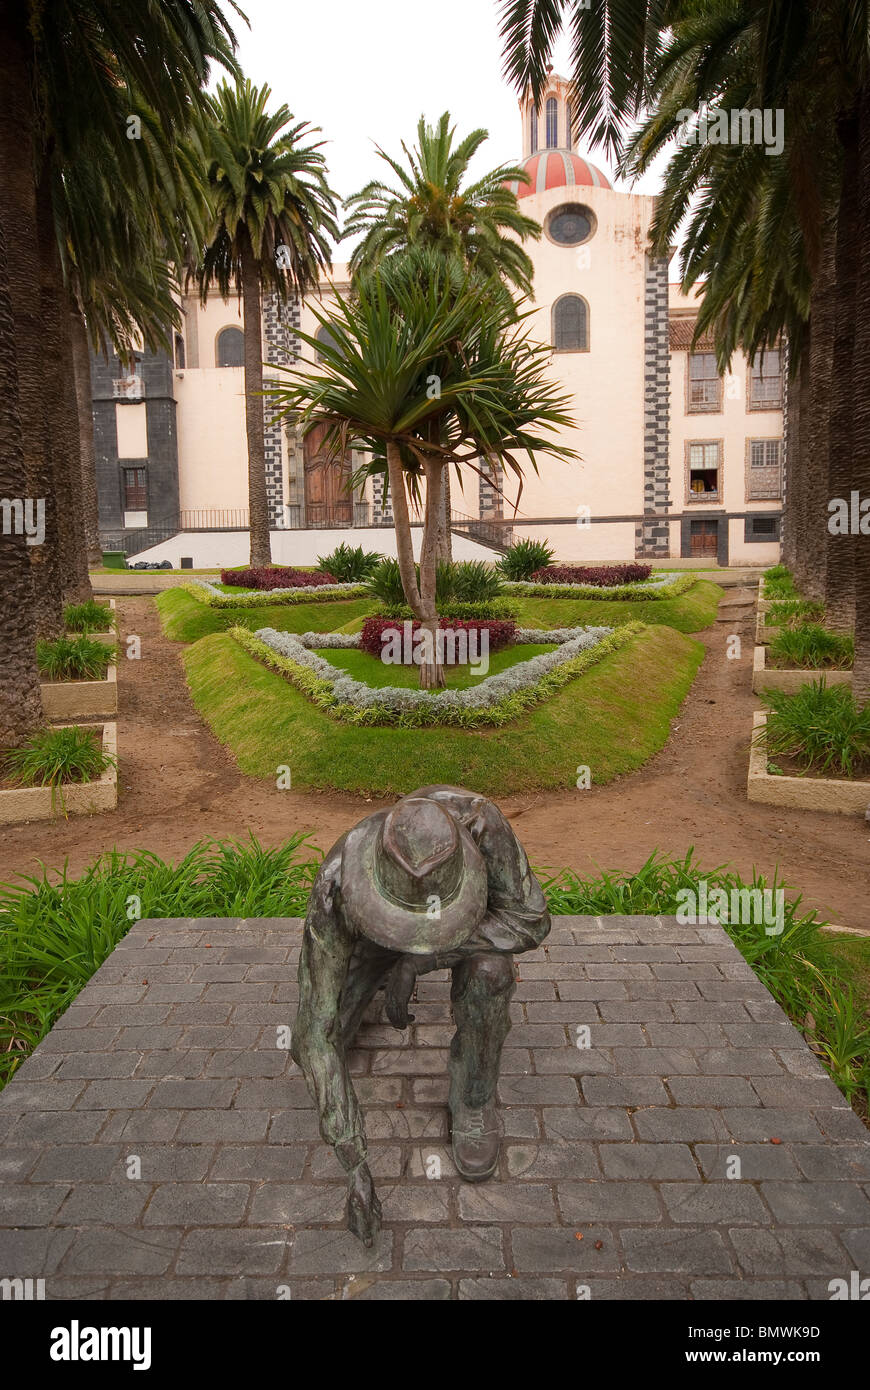 Homenaje al alfombrista, statue for the homage to the carpet makers, by Juan Carlos Armas Peraza in La Orotava, Tenerife Stock Photo